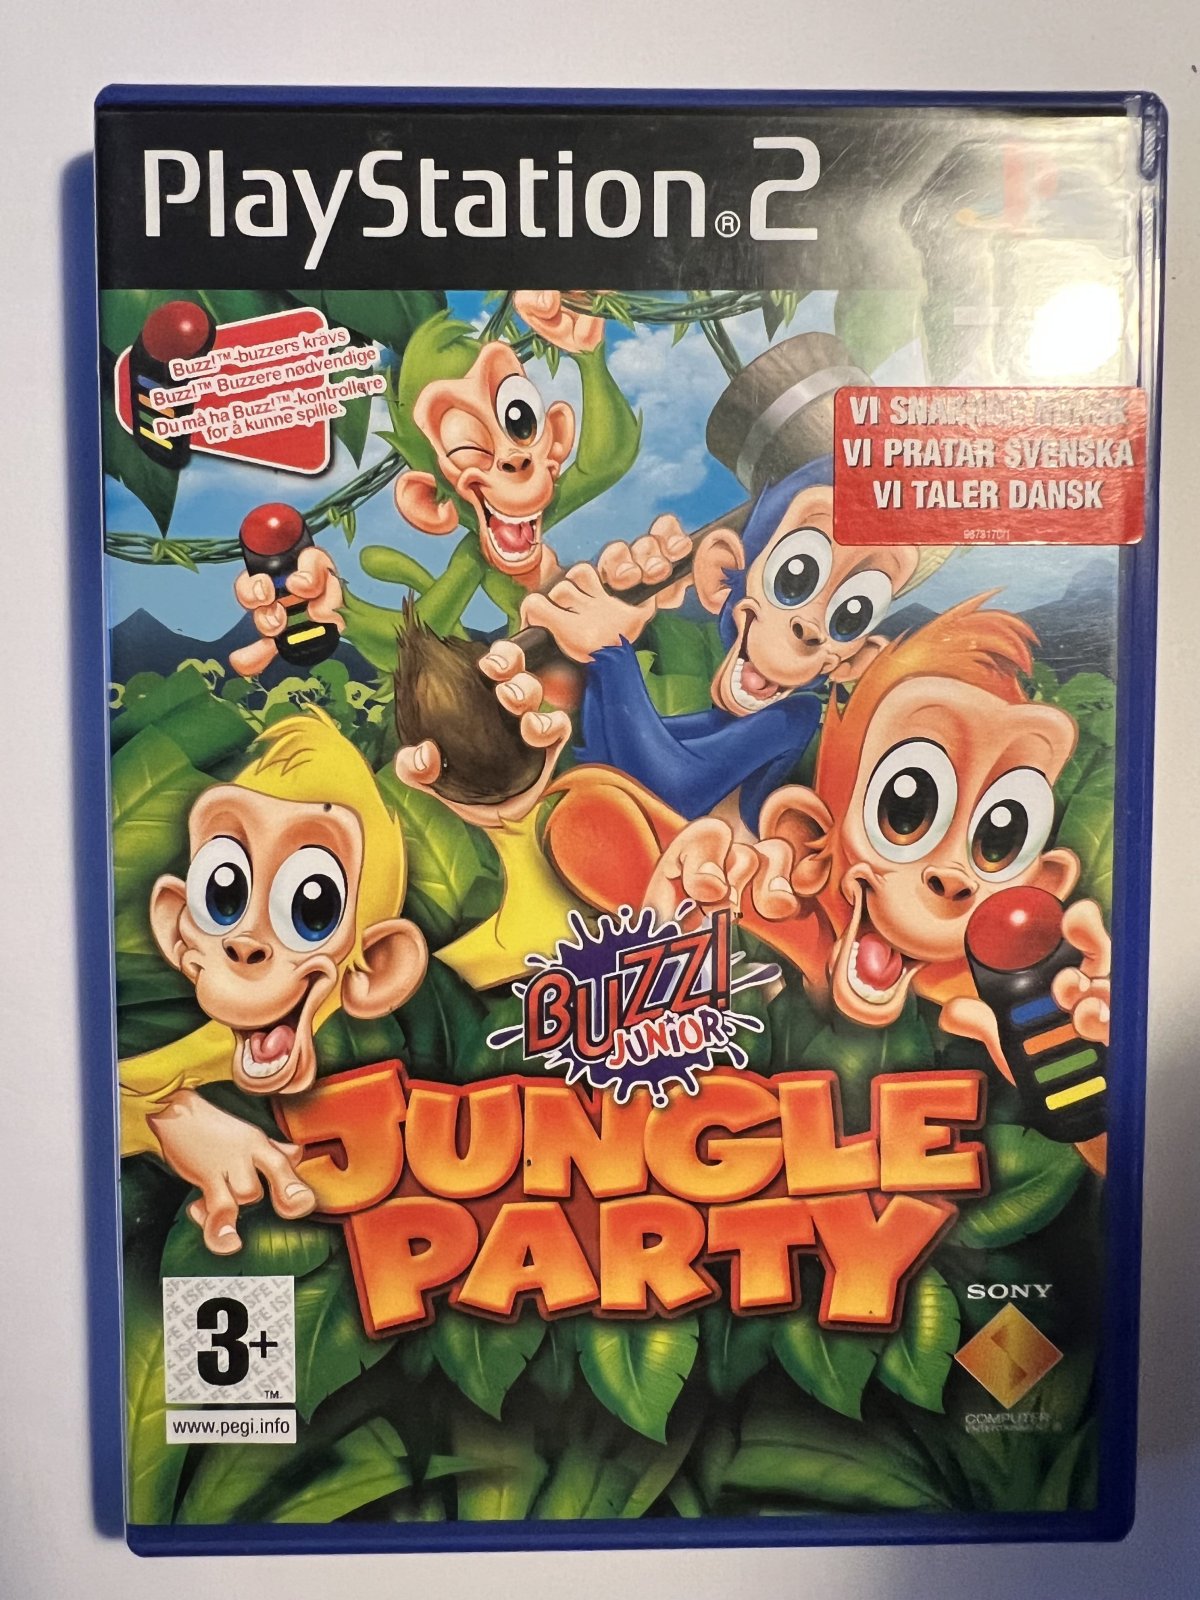 Buzz Junior Jungle Party - Playstation spil - Direkte Fra Lolland